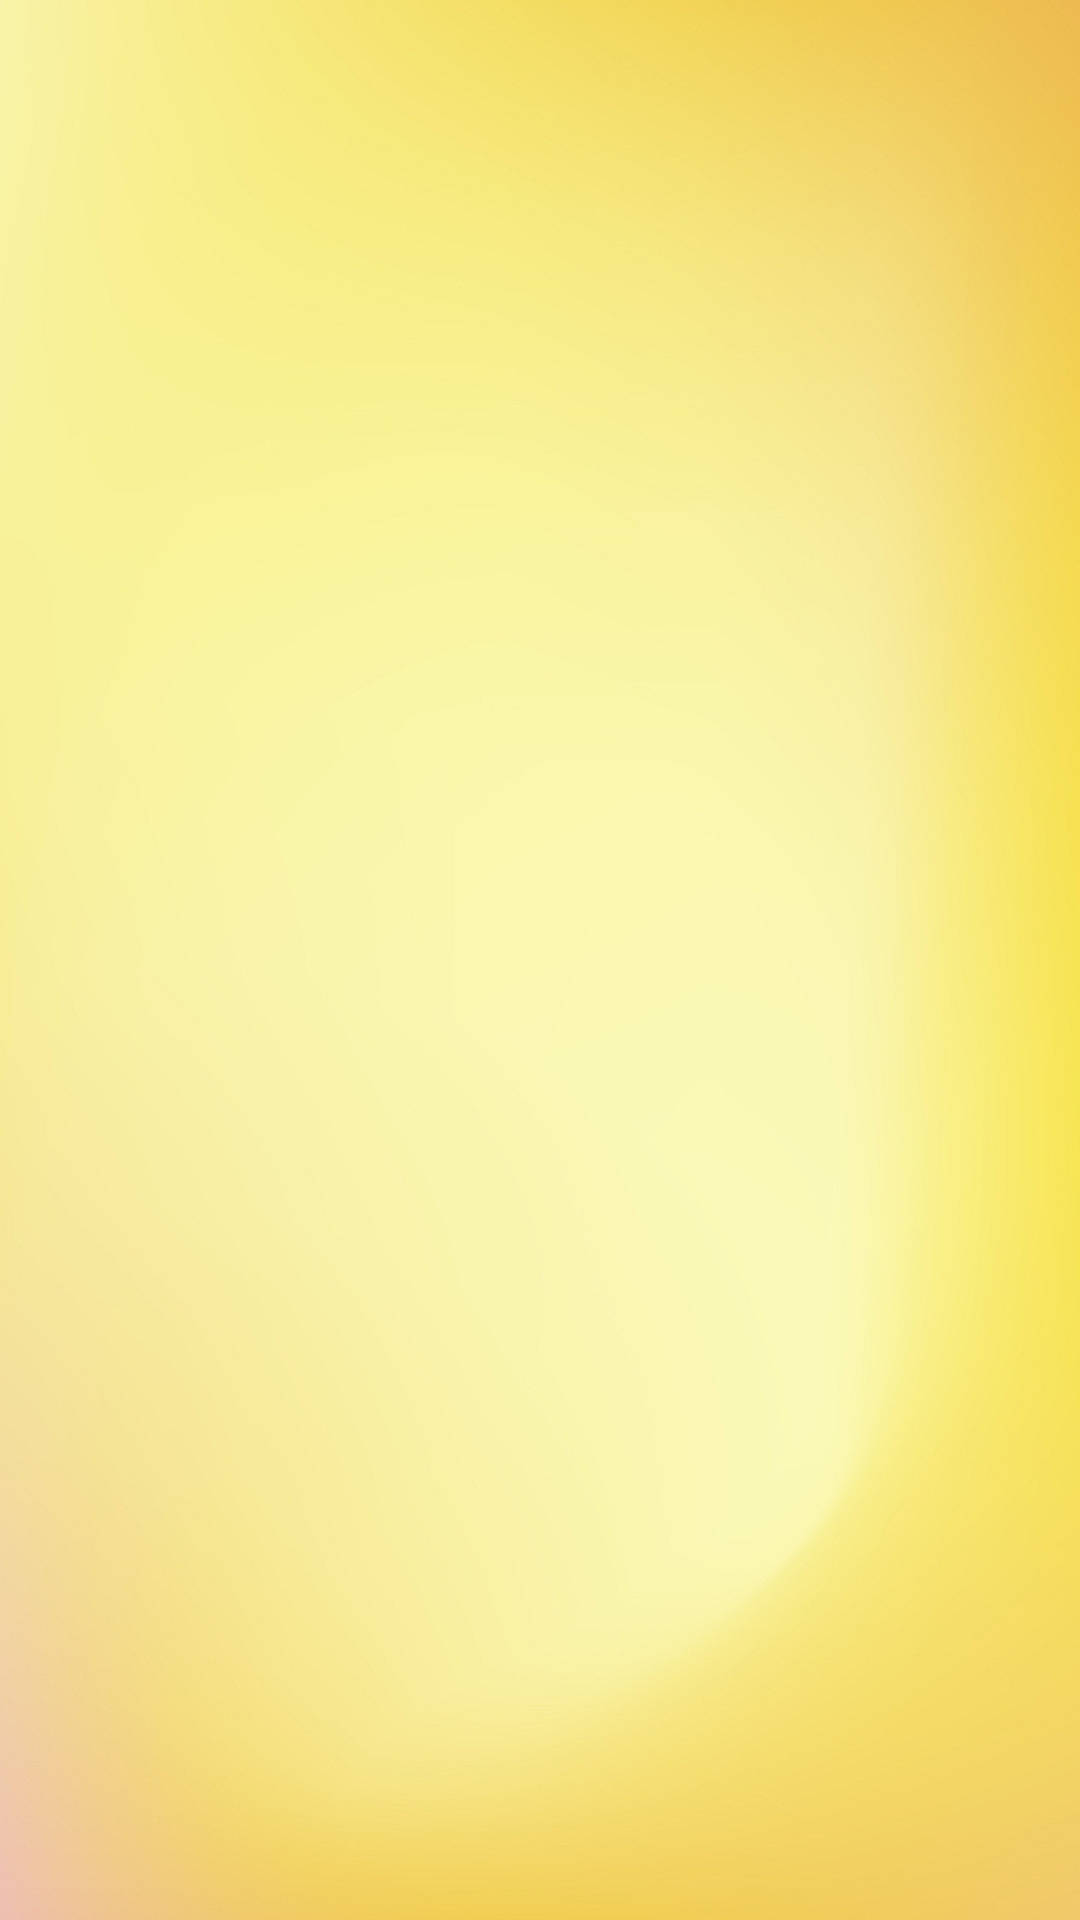 Simple Yellow Hd Iphone Wallpaper